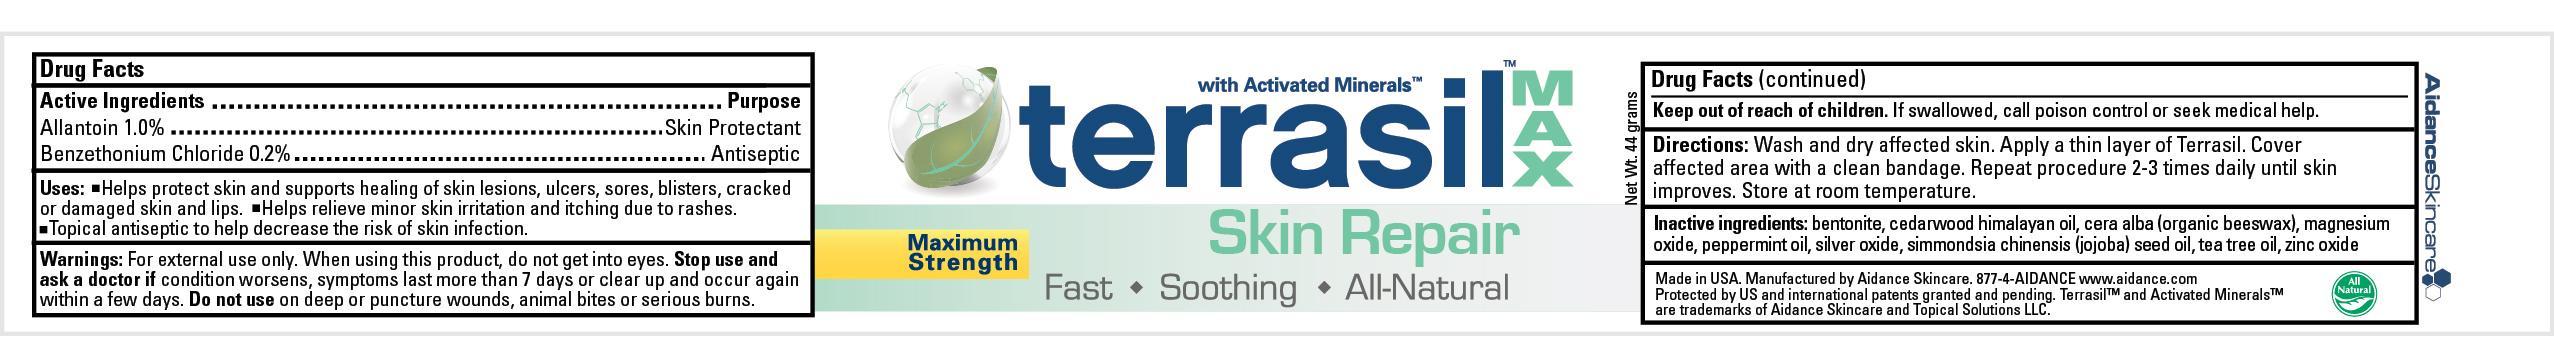 Terrasil Skin Repair Max (Allantoin, Benzethonium Chloride) Ointment [Aidance Skincare & Topical Solutions, Llc]